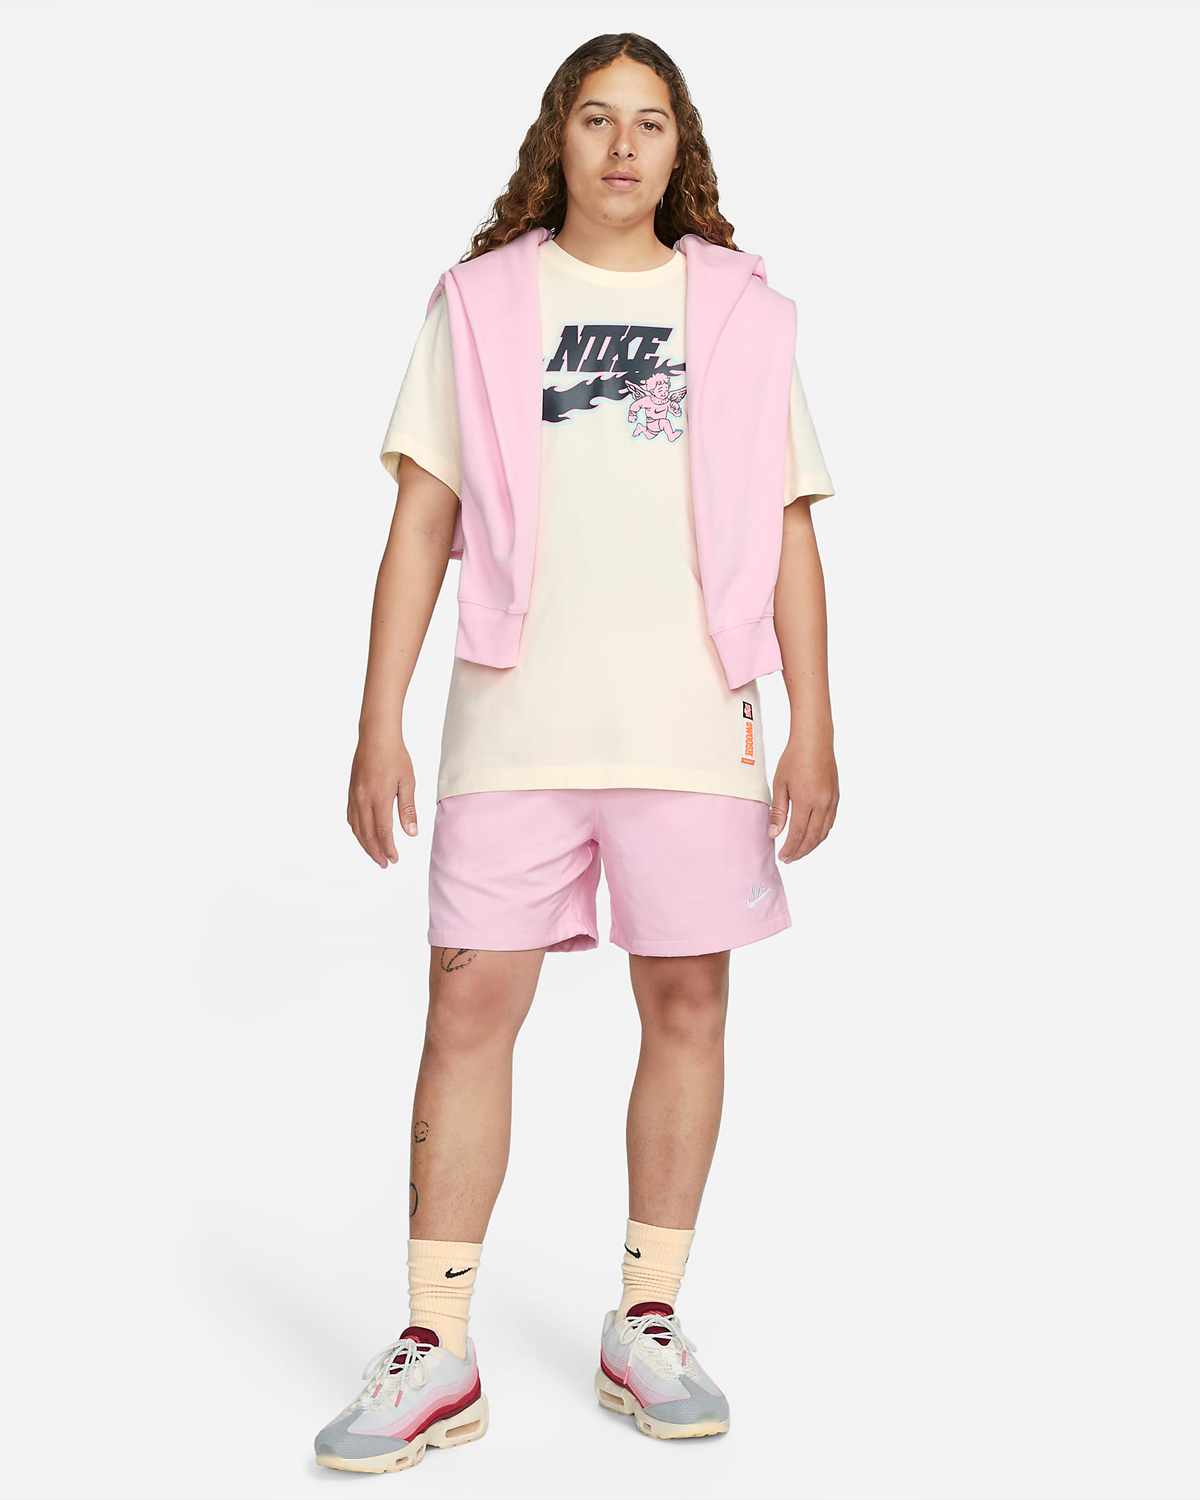 Nike-Sportswear-Shirt-Coconut-Milk-Pink-Outfit